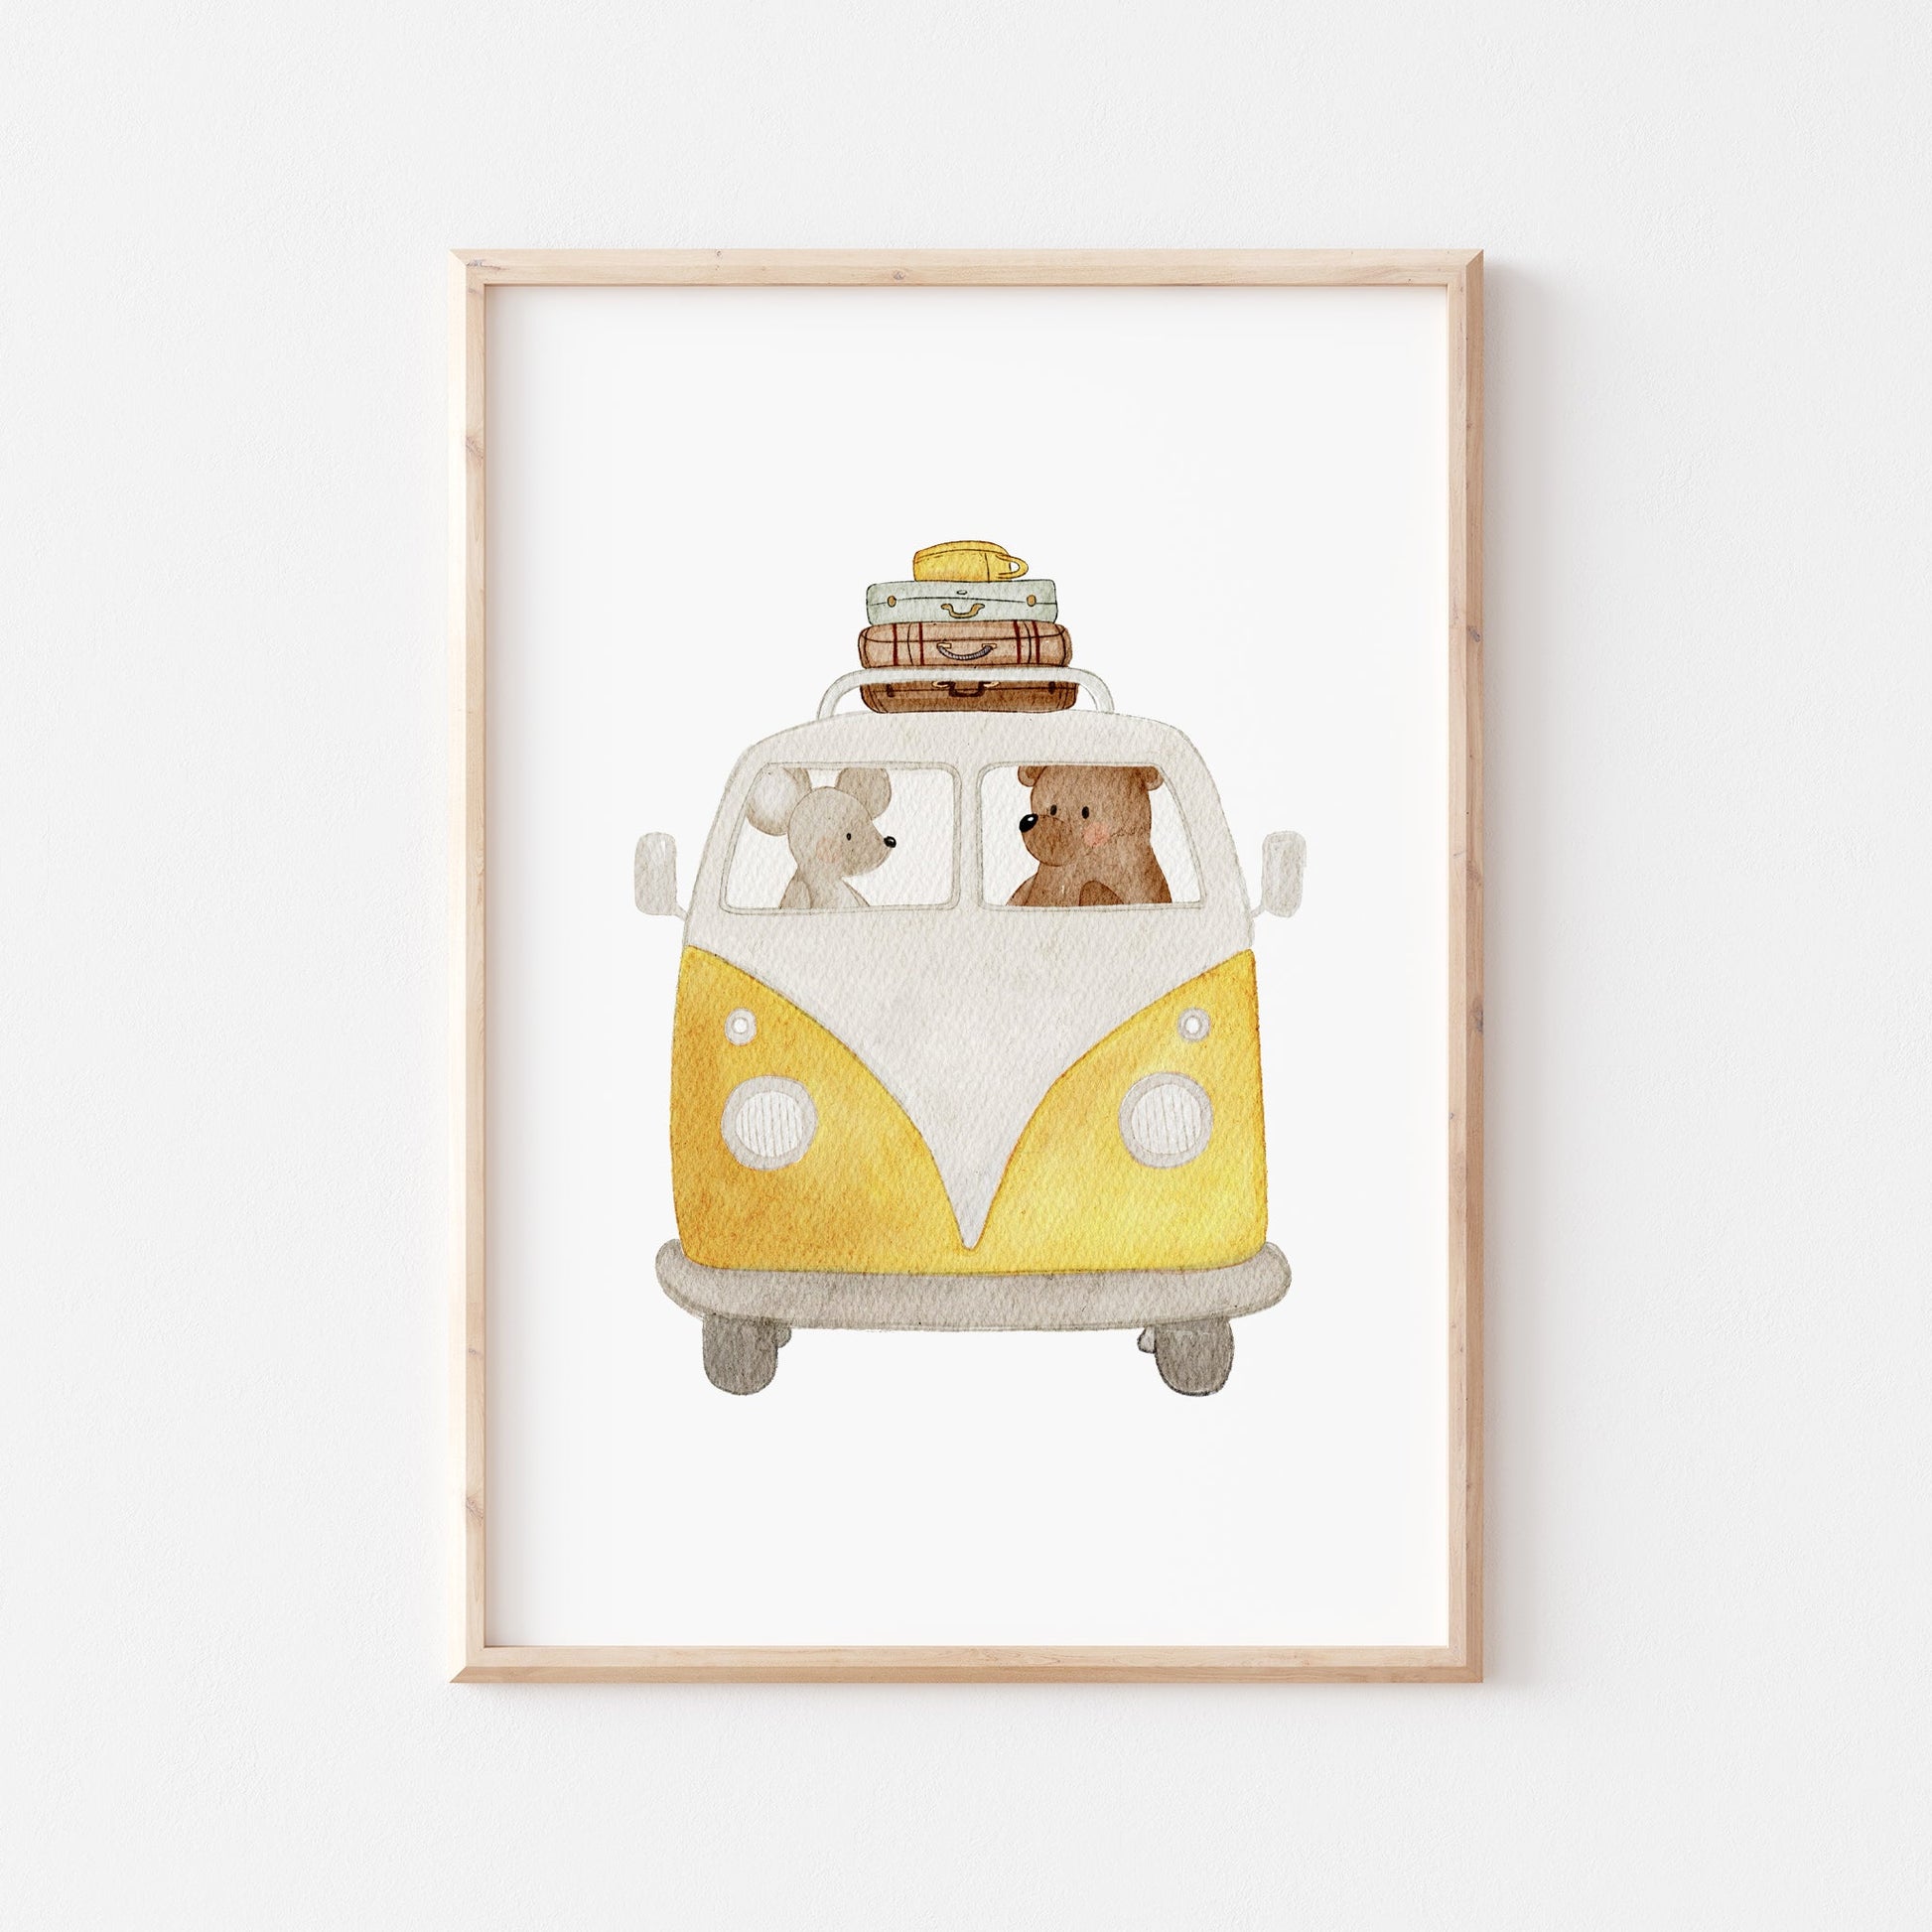 Poster Retro-Bus 'Bulli' | Kinderzimmer Deko | DIN A4 oder A5 | verschiedene Farben Kotenkram DIN A4 (210 x 297 mm) Gelb